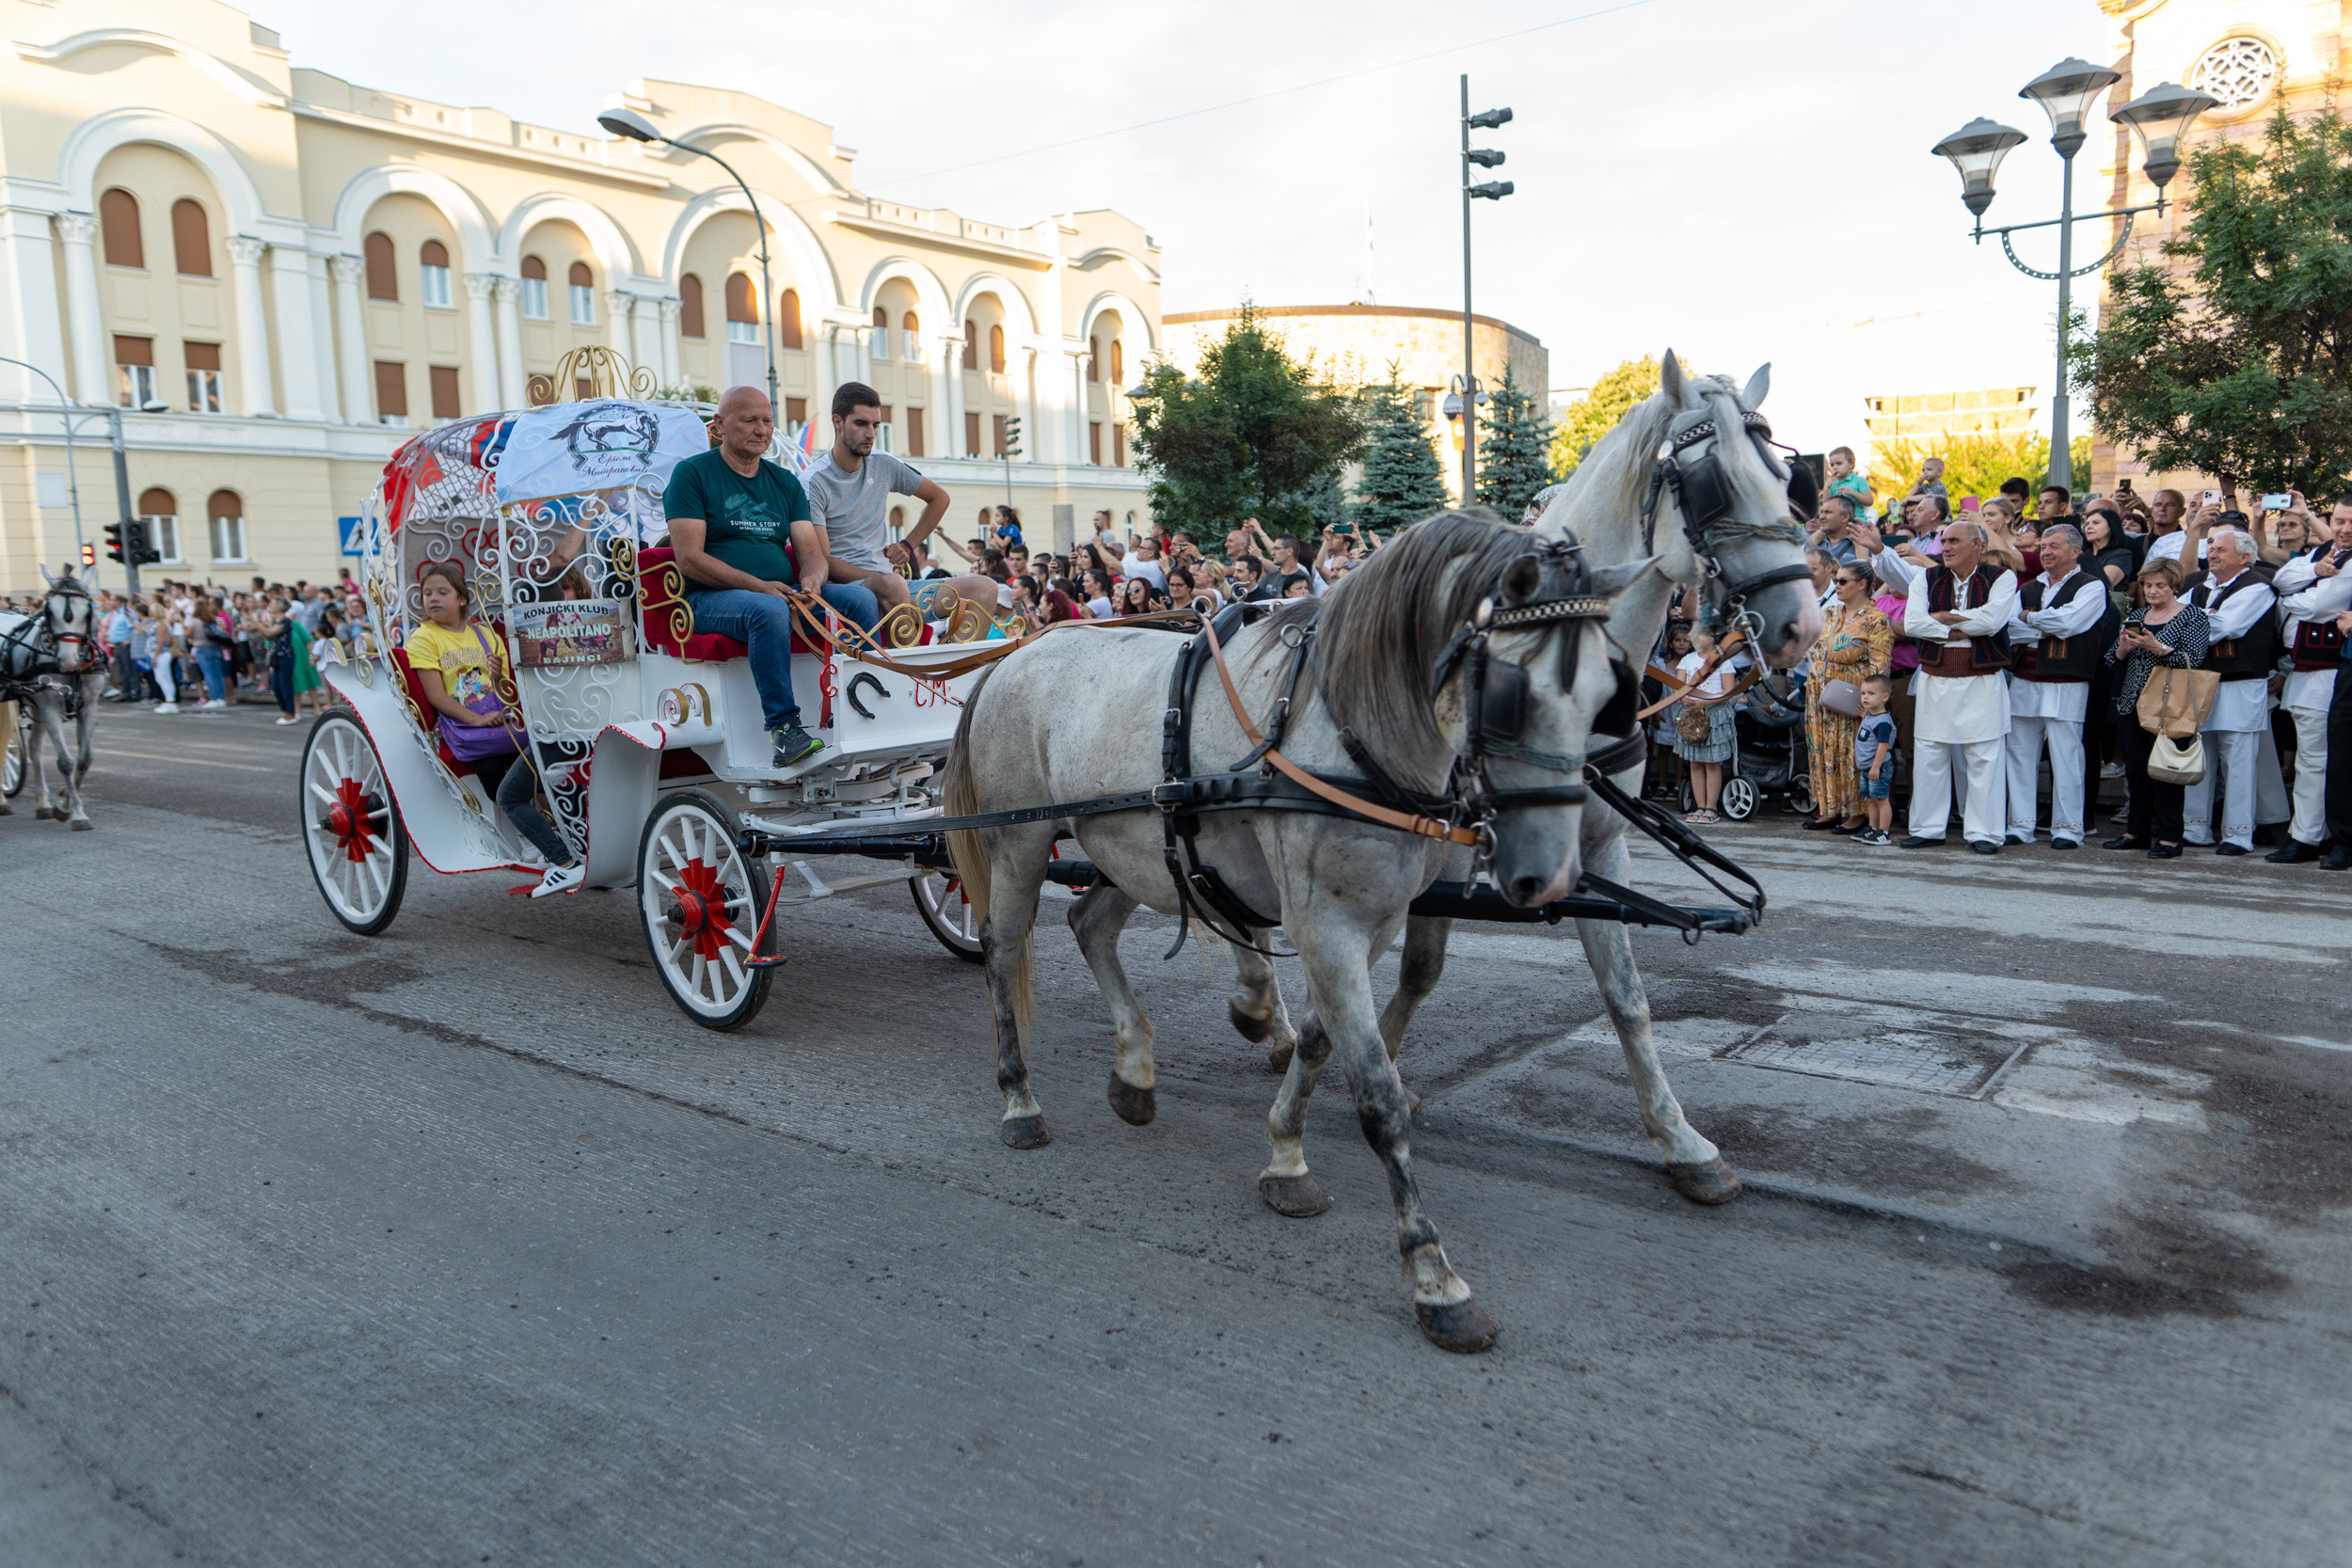 PLANIRAN BOGAT PROGRAM Banjaluka u utorak proslavlja duhove uz defile kočija